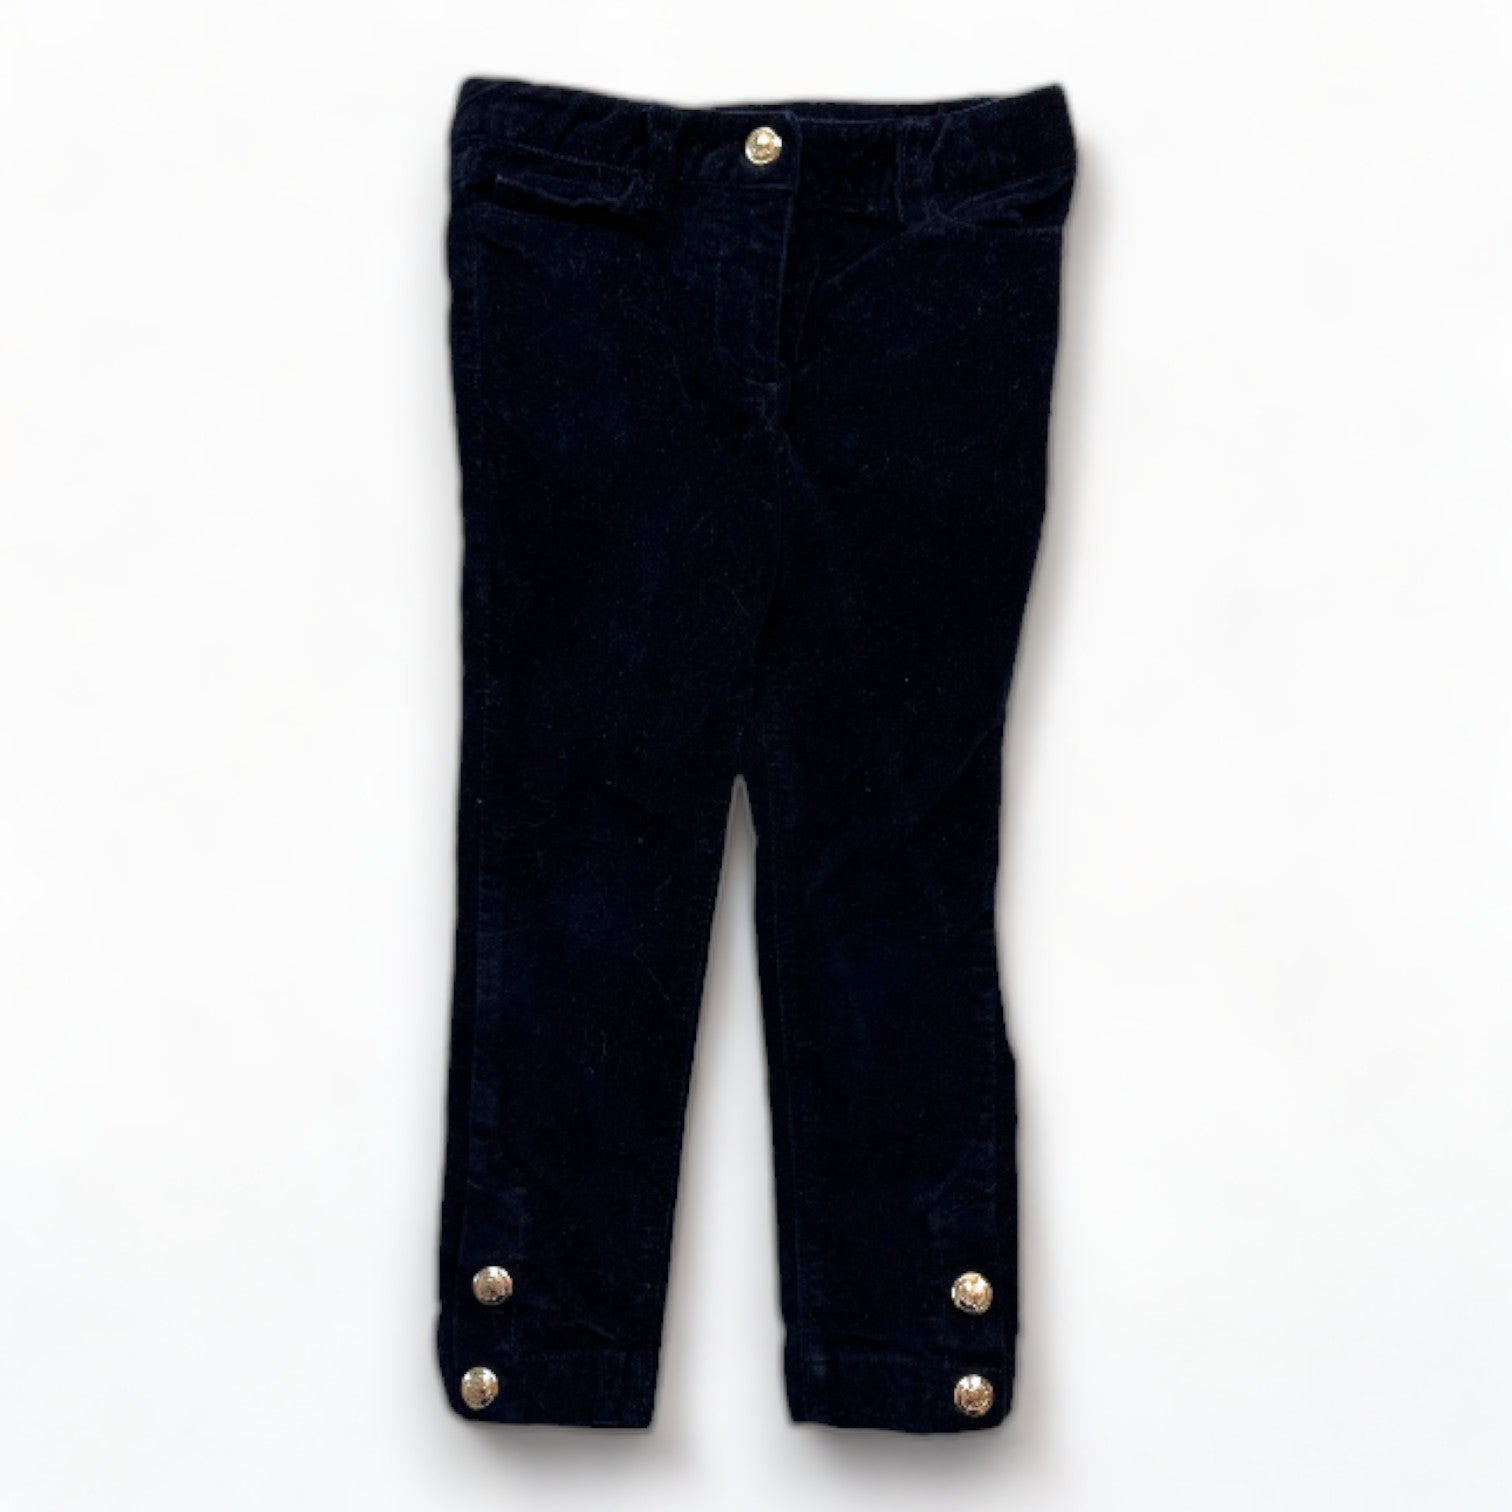 JACADI - Pantalon en velours bleu marine avec boutons en or - 3 ans